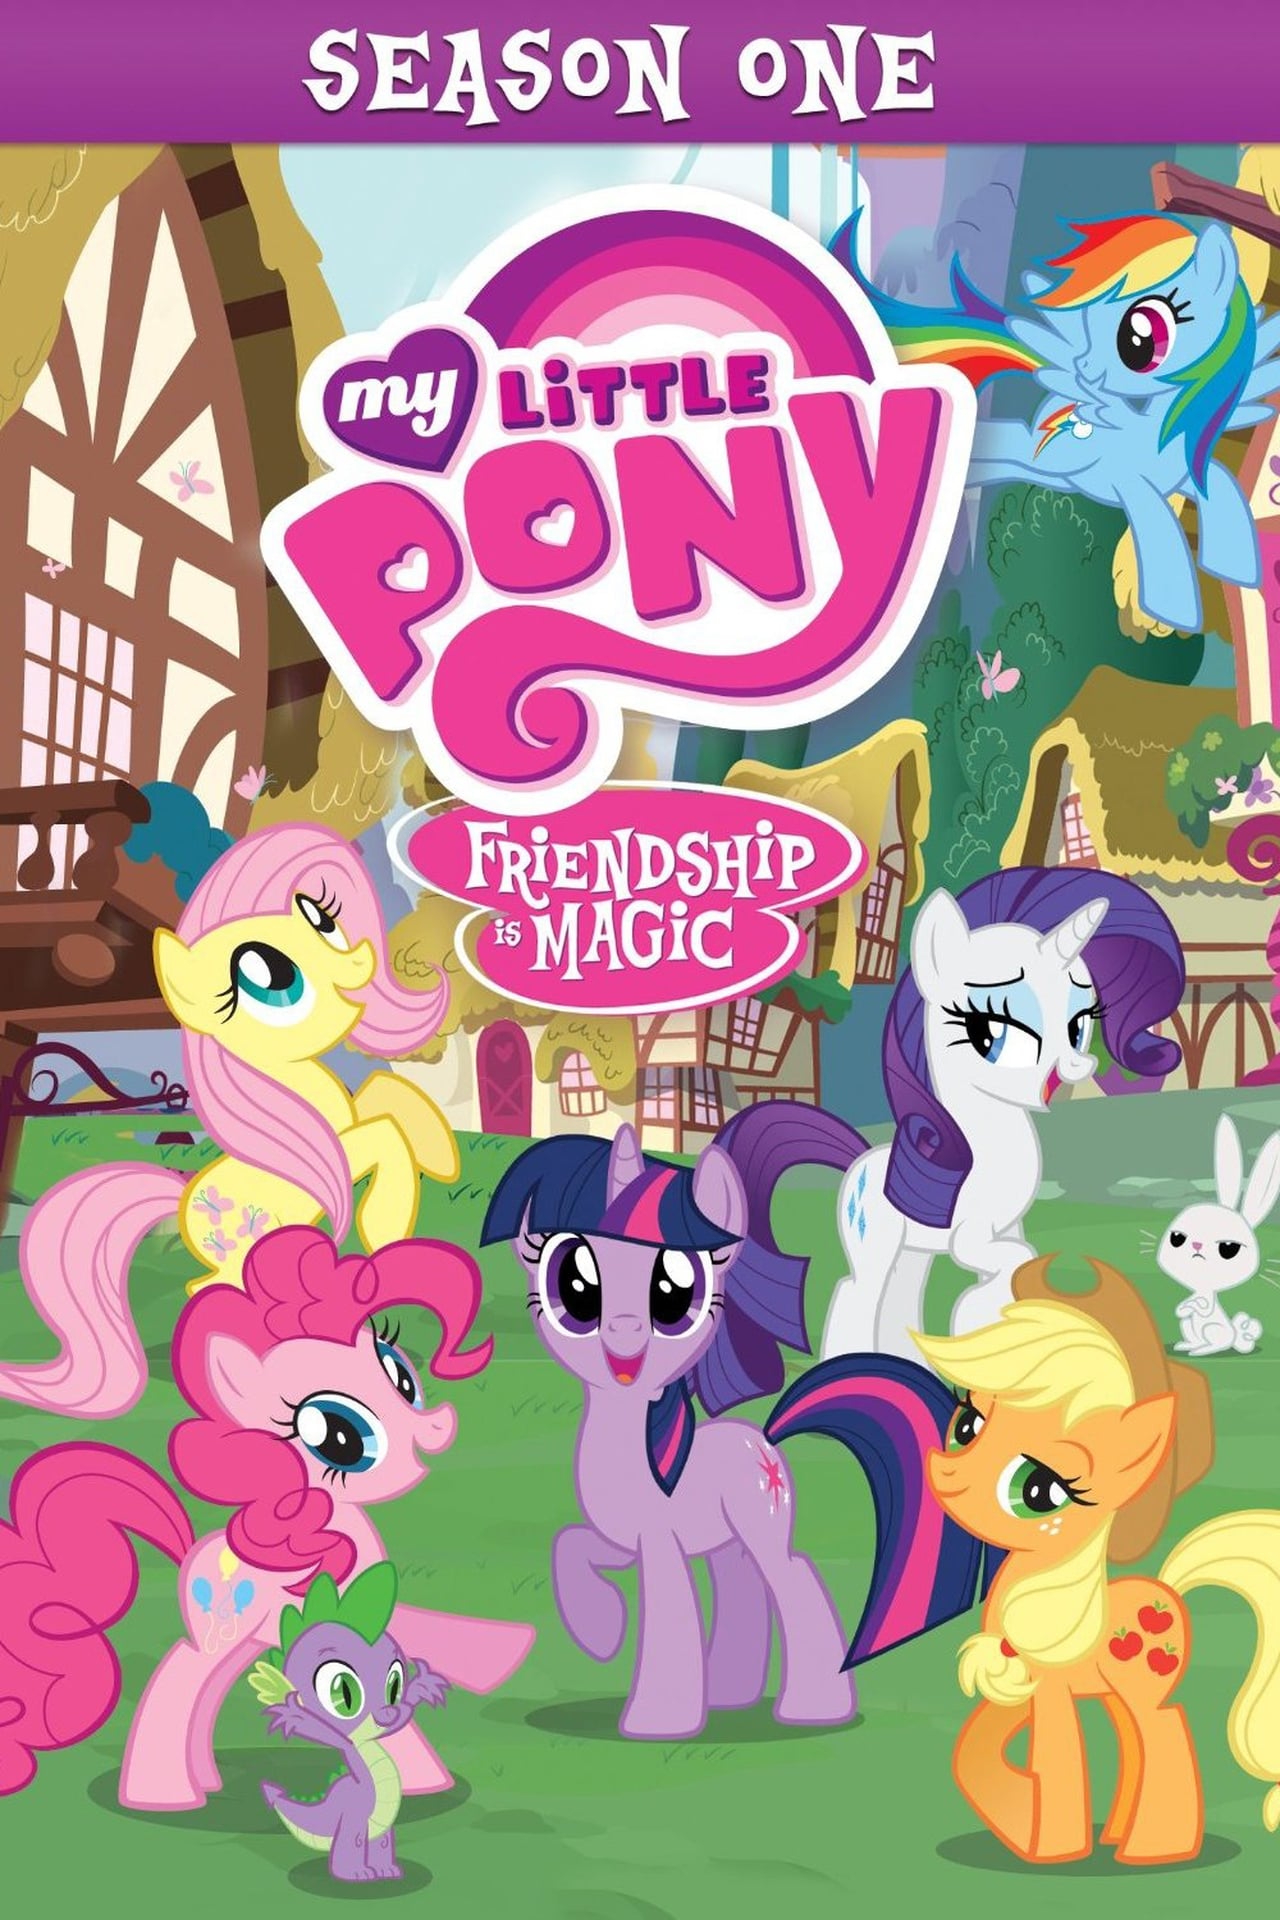 My Little Pony: Friendship Is Magic Season 1 - Watch full episodes free - Where To Watch My Little Pony Season 1